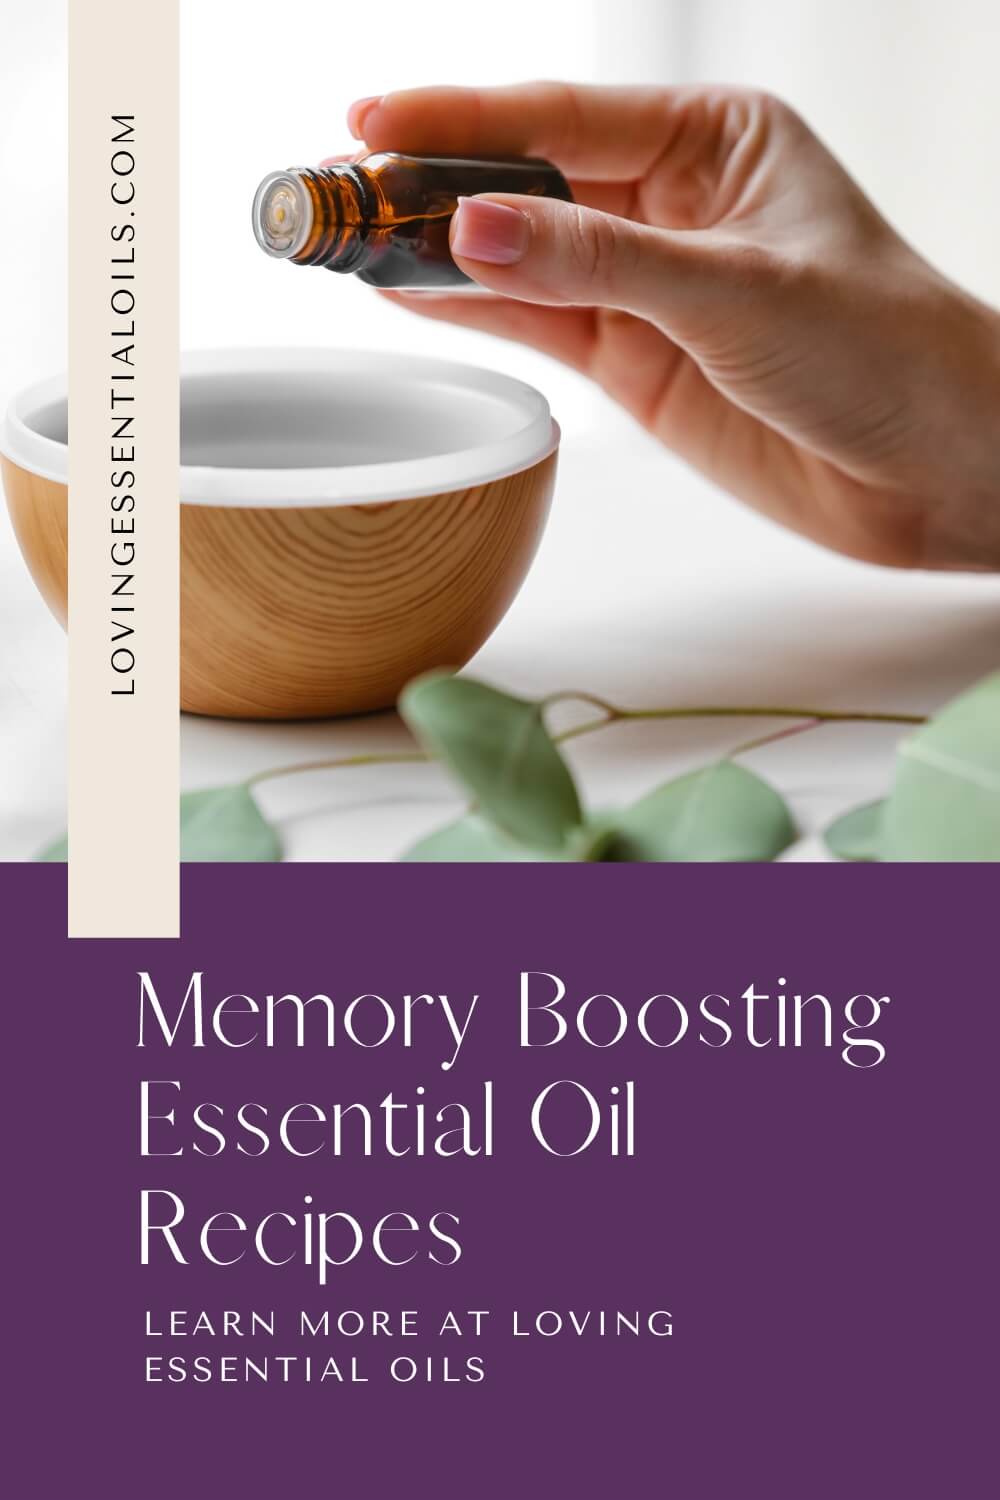 Memory Boosting Essential Oil Recipes by Loving Essential Oils